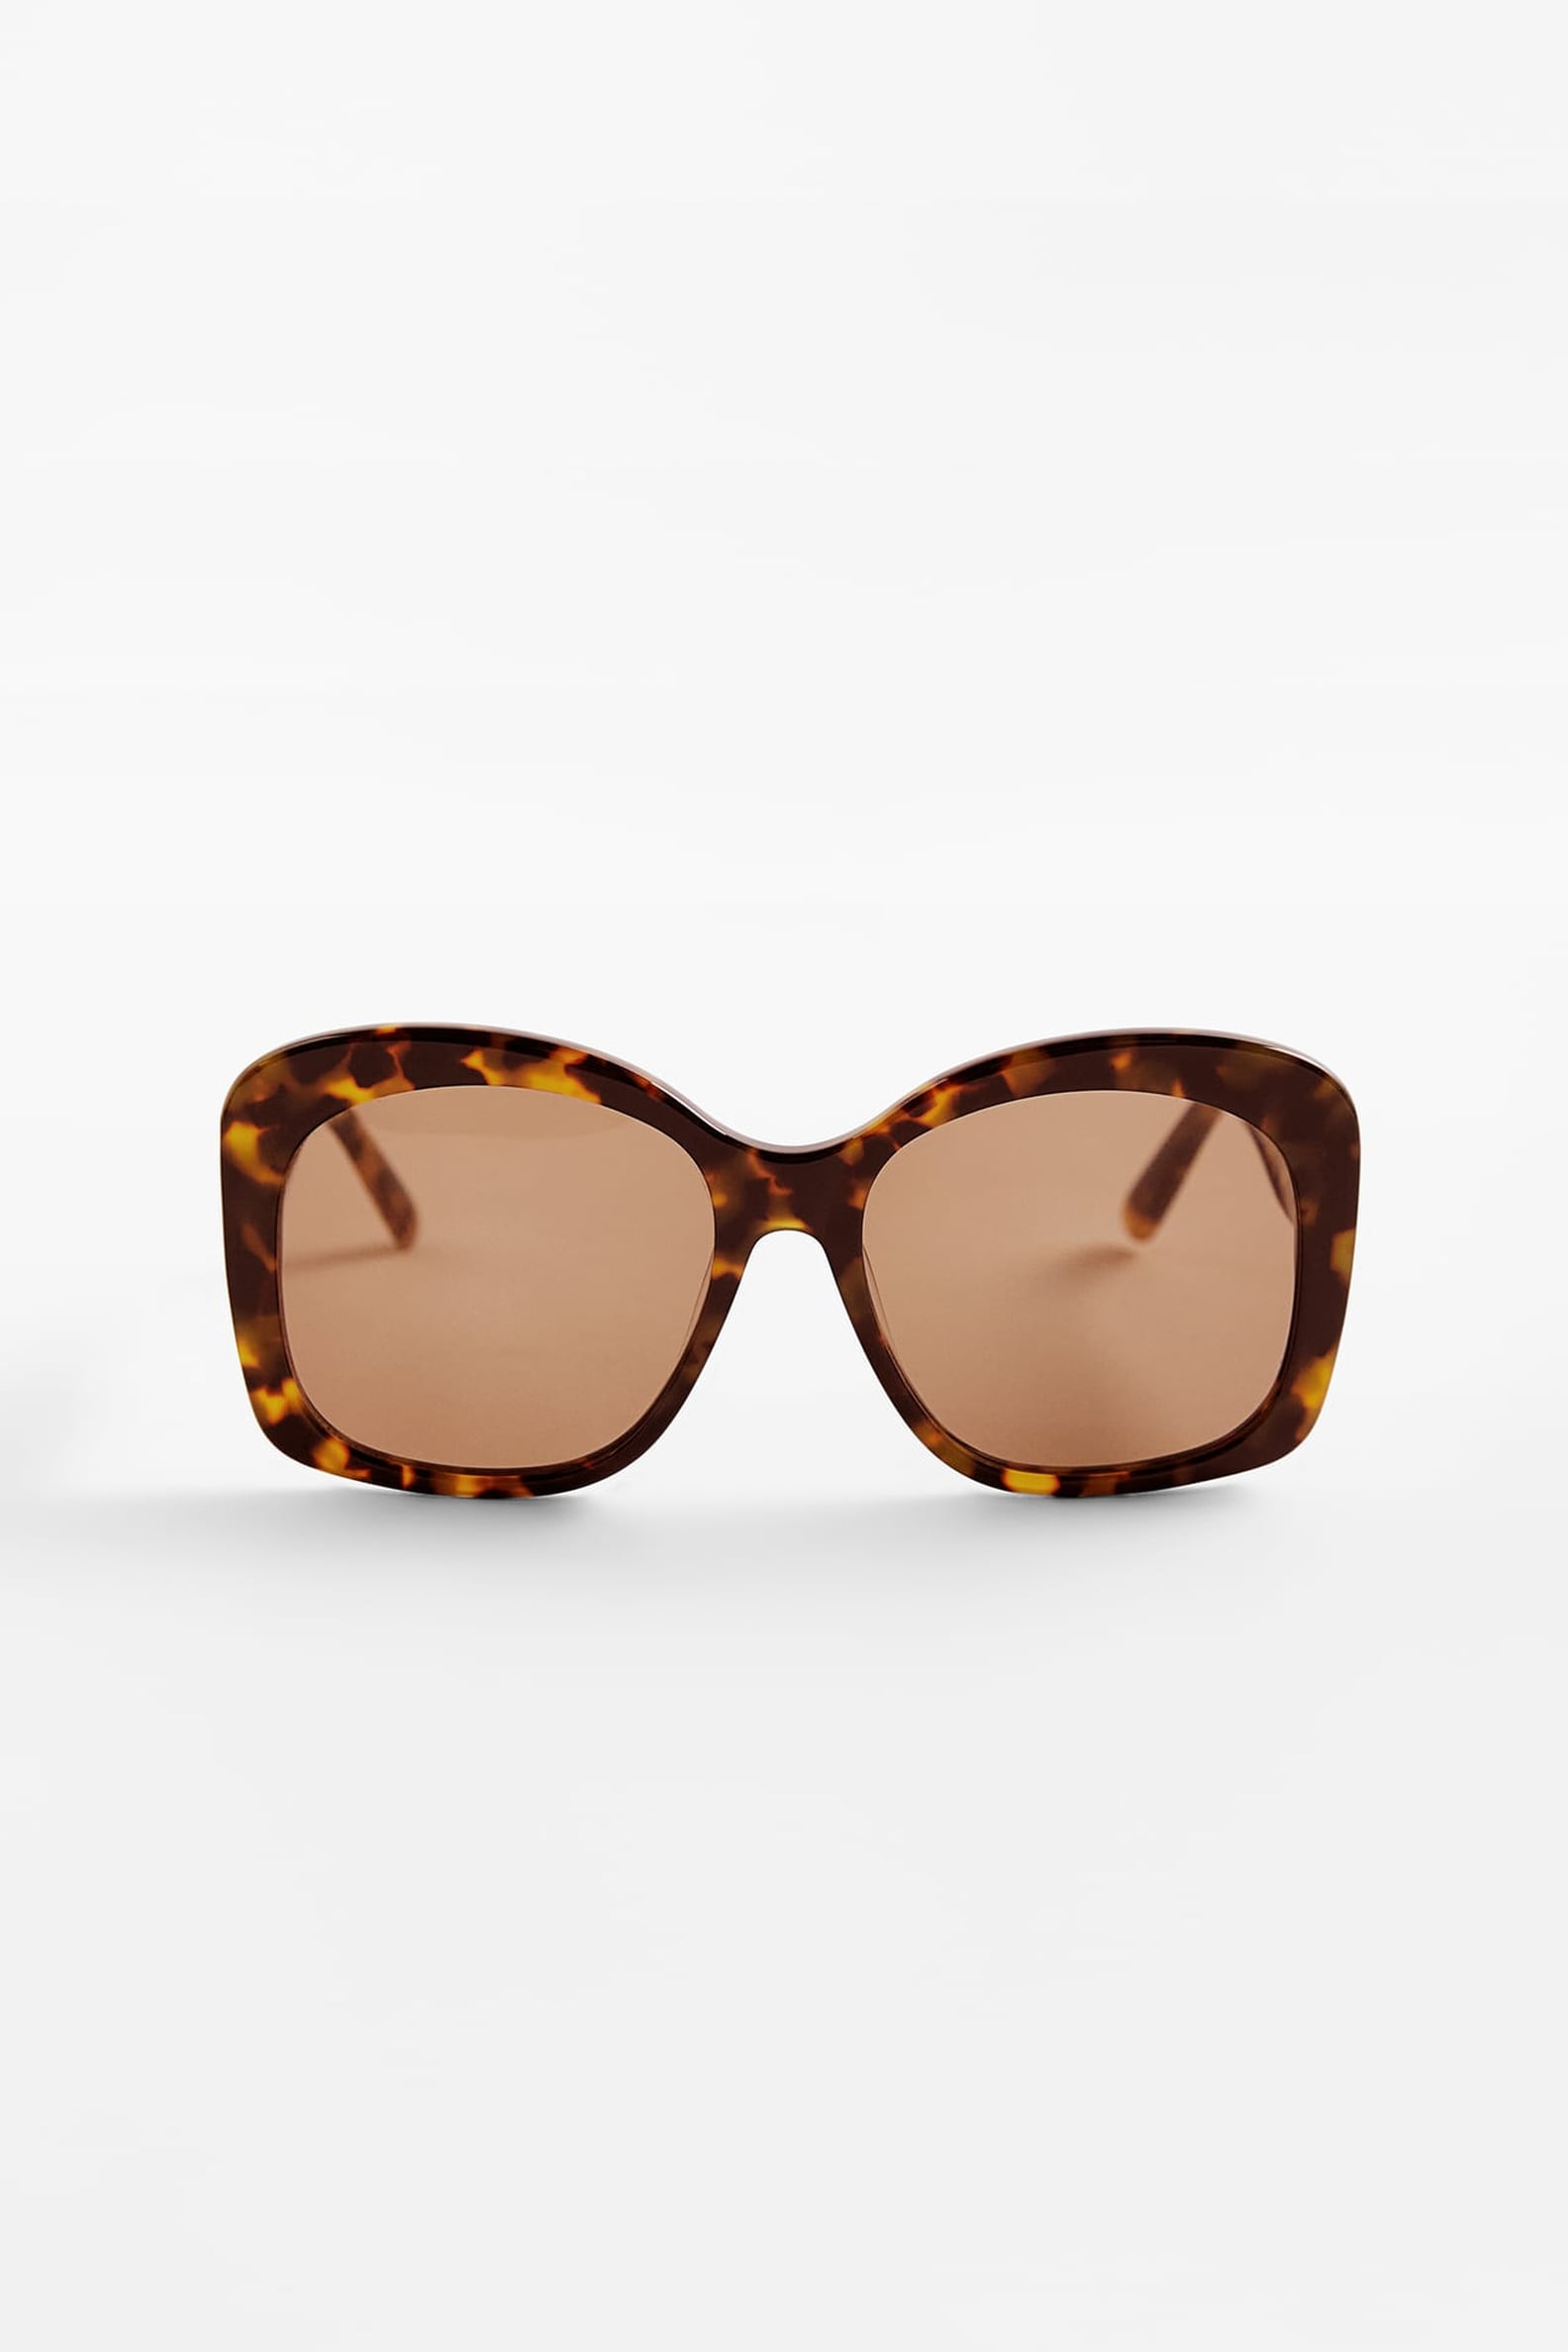 Cute Cheap Sunglasses | POPSUGAR Fashion